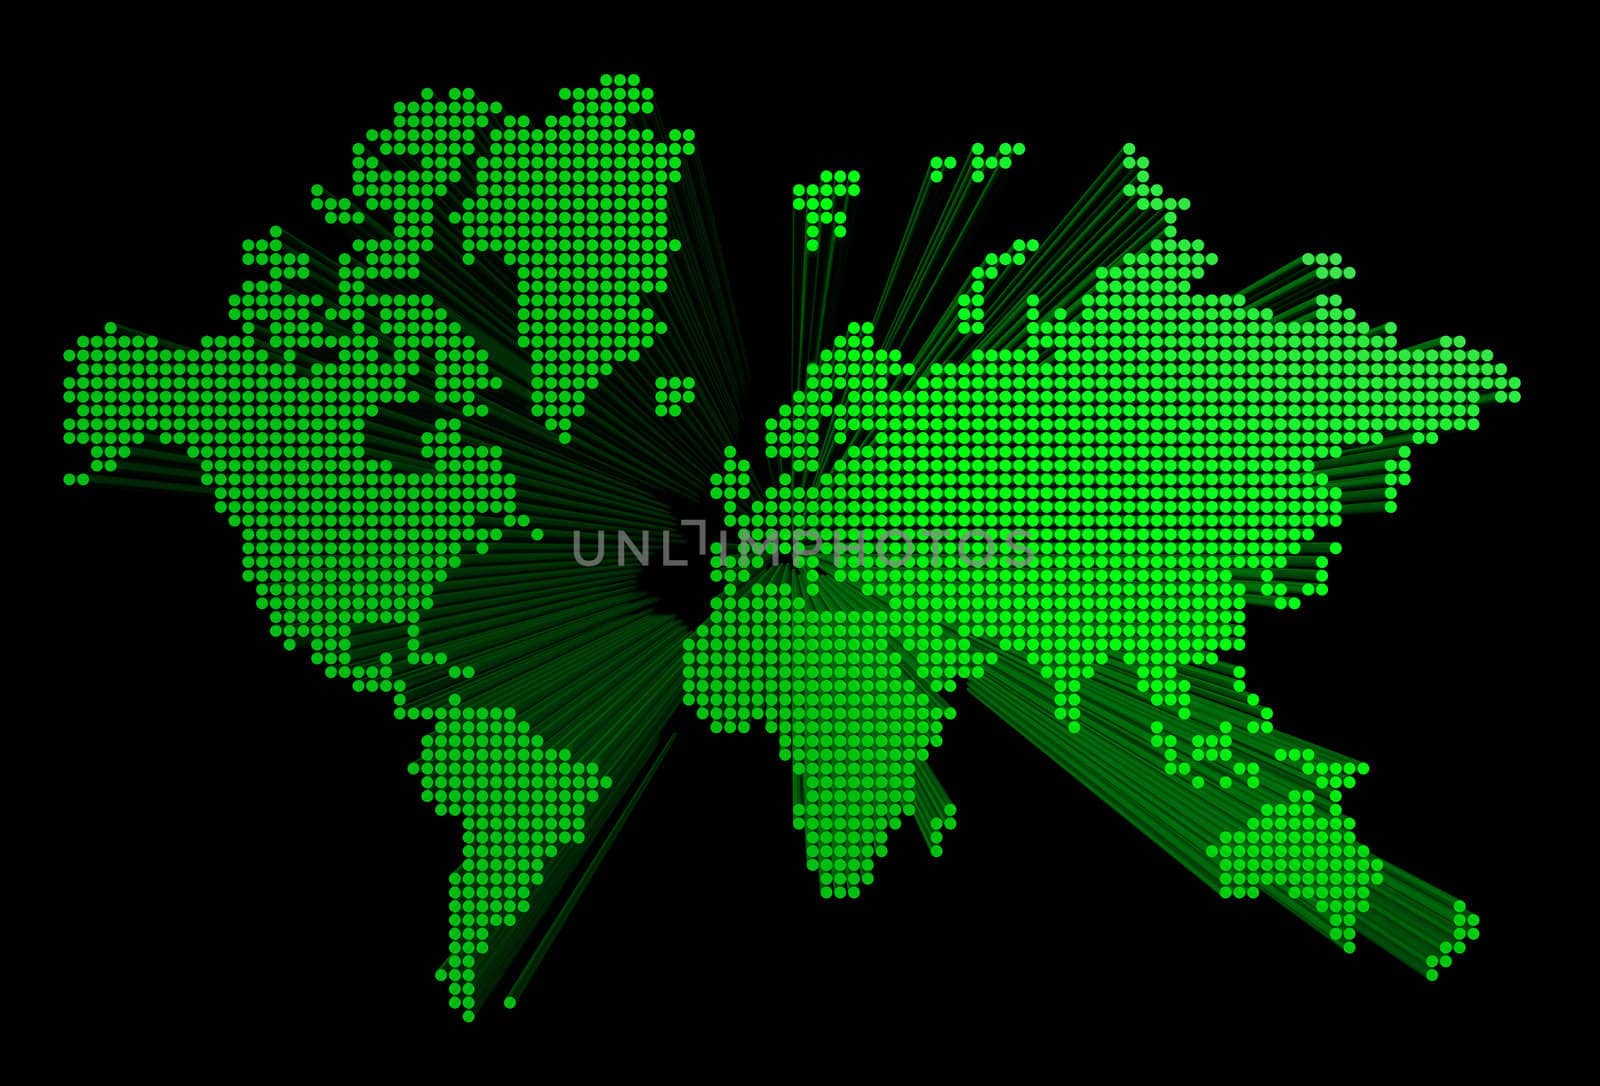 three dimensional green world map by daboost